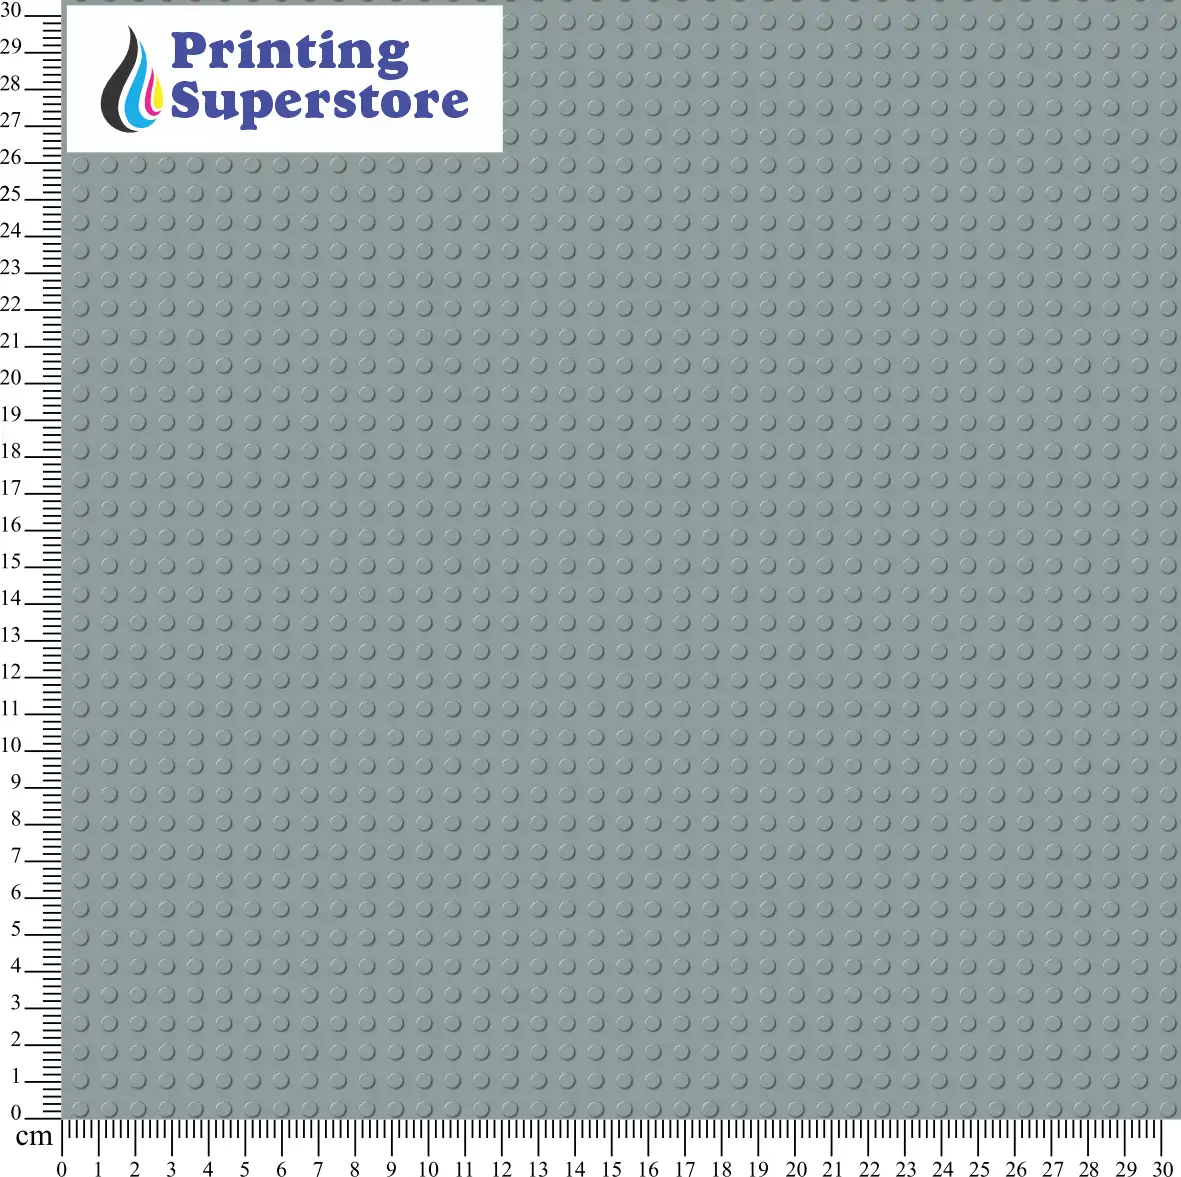 Building Block theme pattern printed on Self Adhesive Vinyl (SAV), Heat Transfer Vinyl (HTV) and Cardstock.